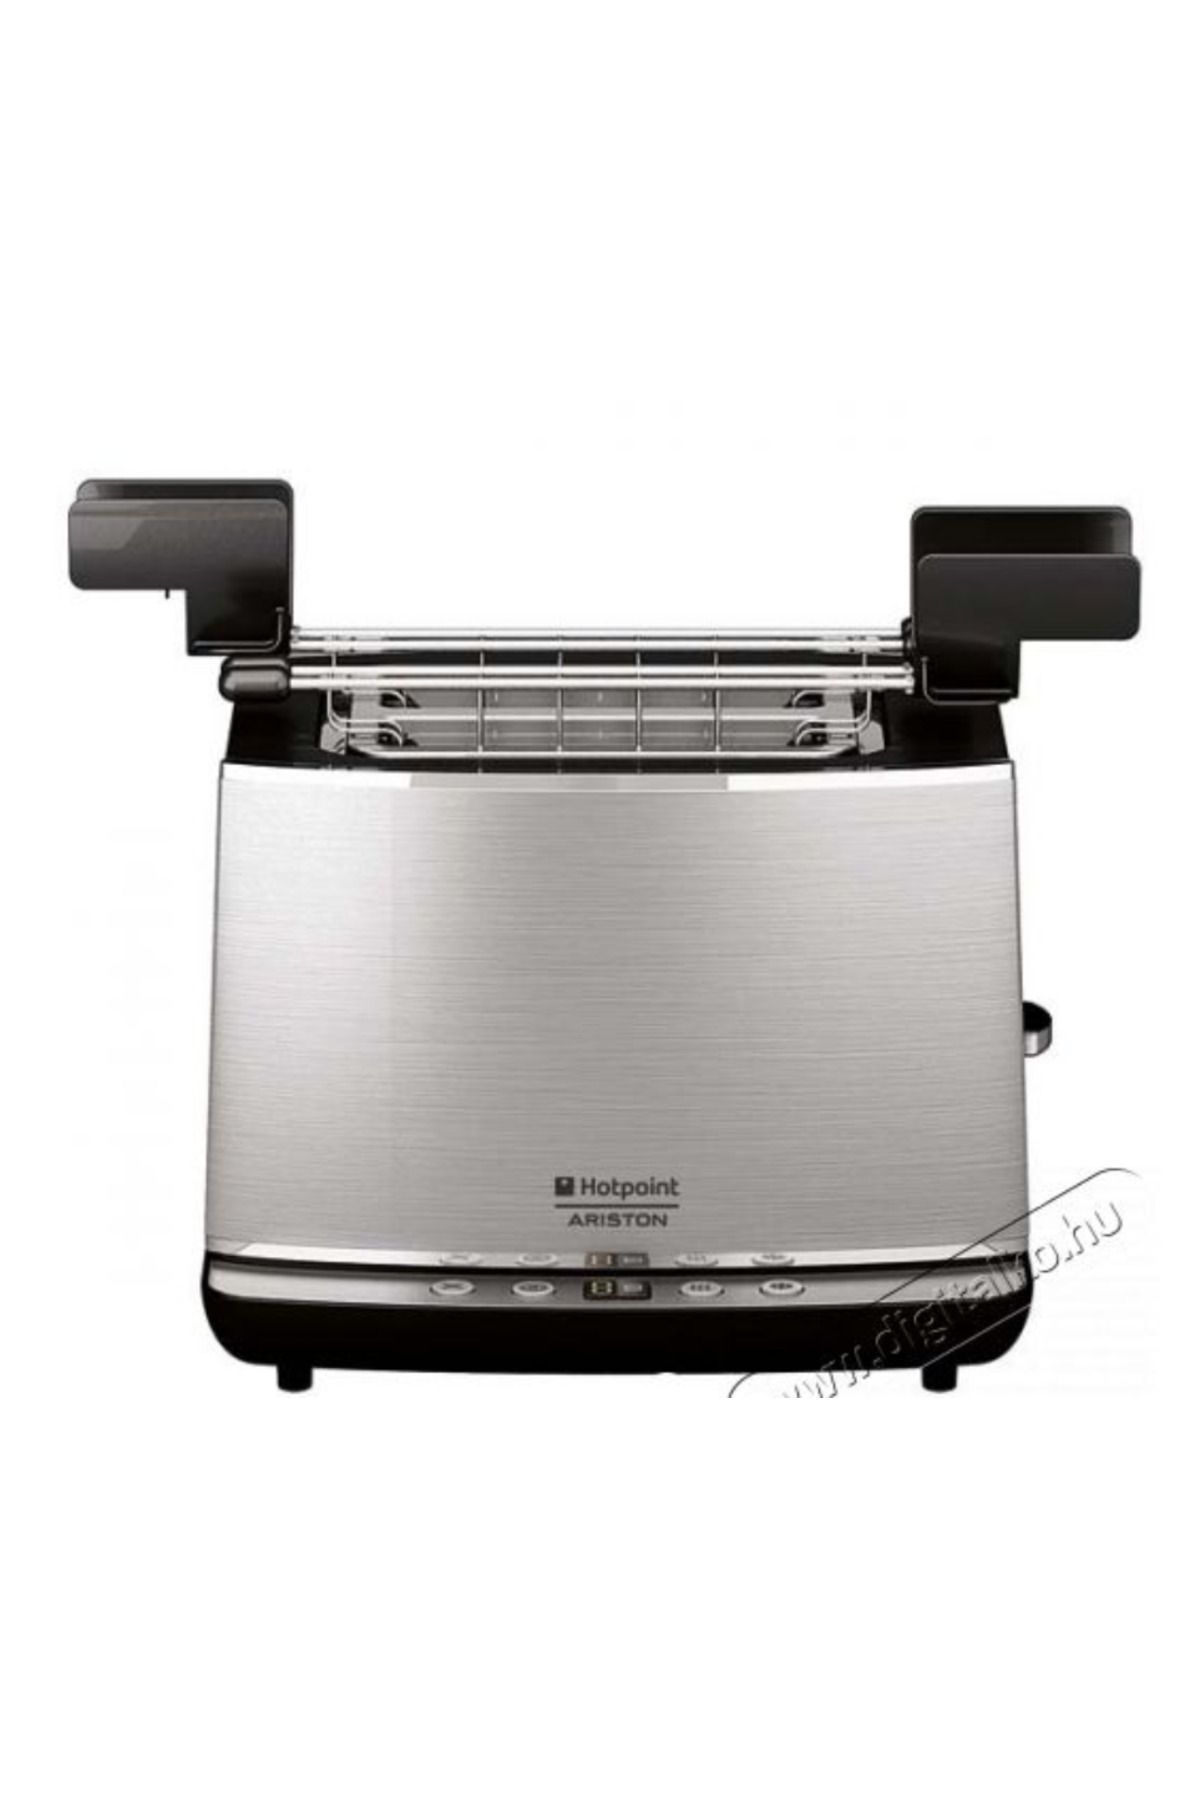 Hotpoint Ariston TT22E AXO 850 W Ekmek Kızartma Makinesi